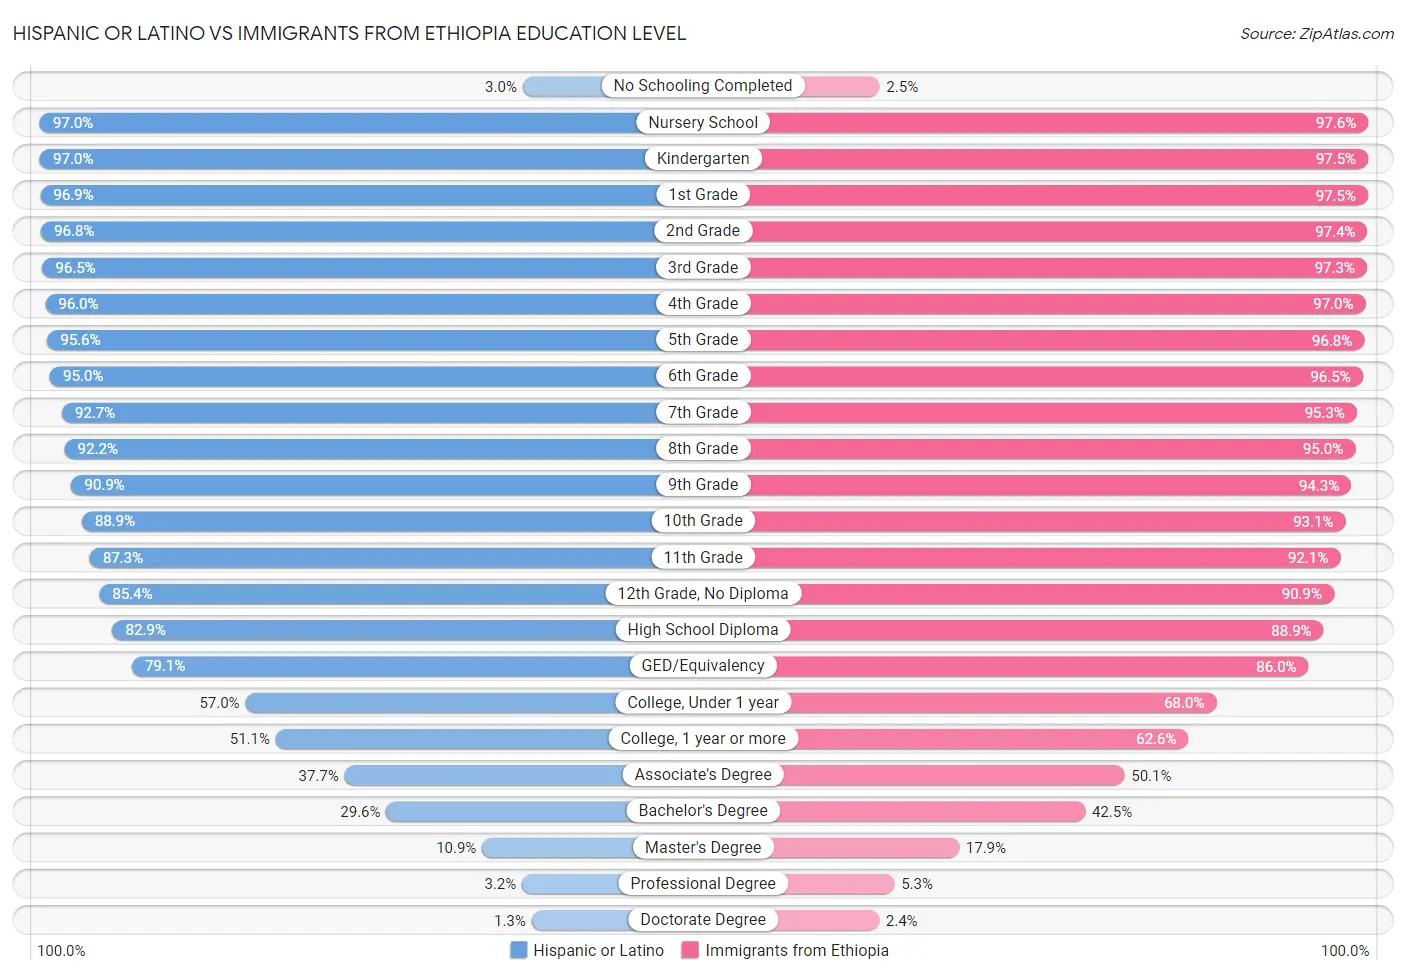 Hispanic or Latino vs Immigrants from Ethiopia Education Level